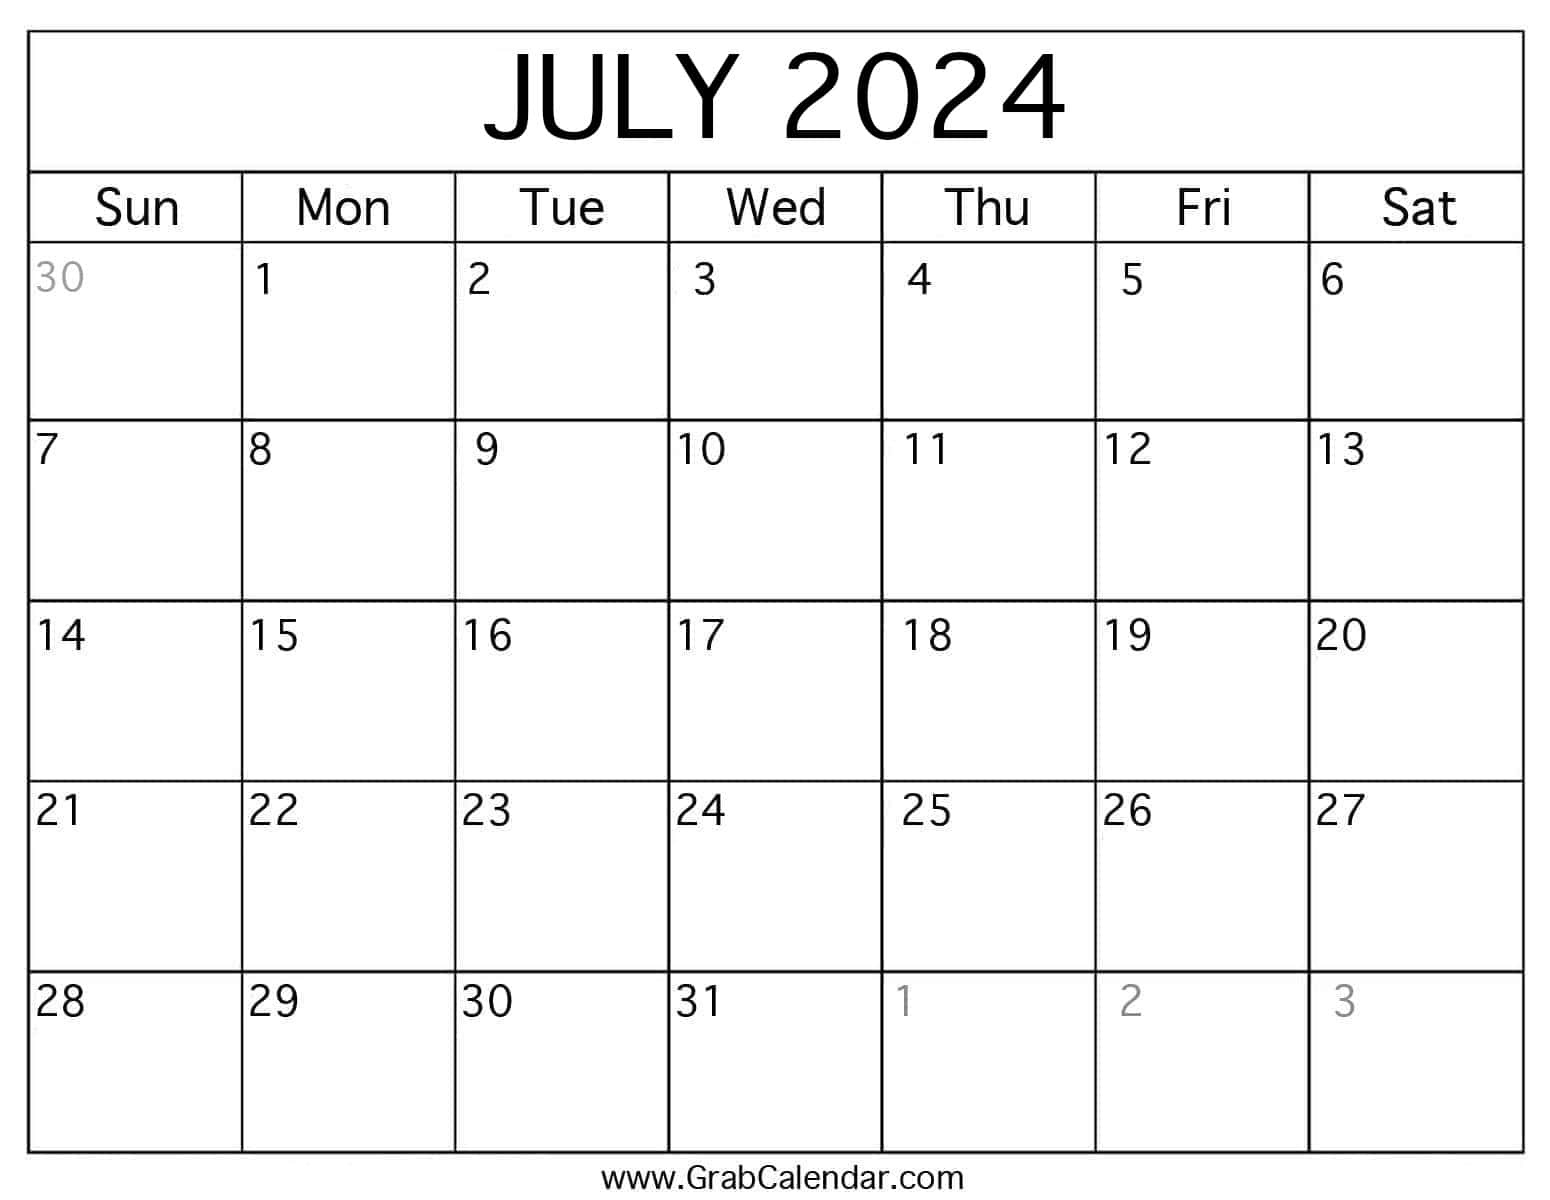 Printable July 2024 Calendar intended for July 2024 Calendar Page